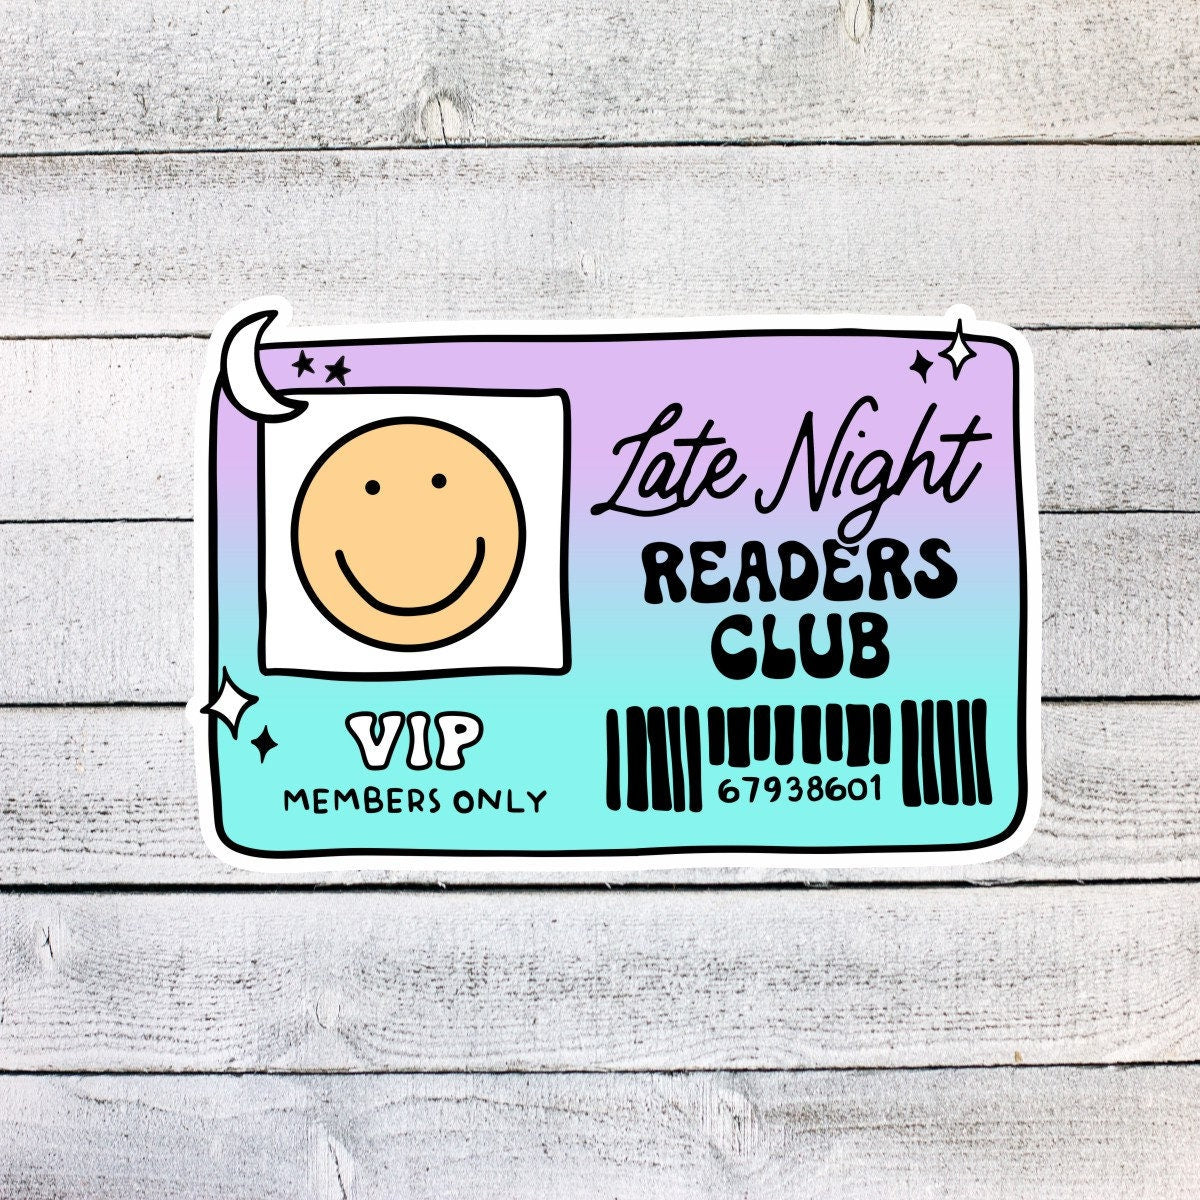 Sweet Vibes Book Lovers Sticker Pack, Sticker, Stickers, Cute Stickers, Water Bottle Sticker, Book Sticker, Funny Stickers, Laptop Stickers